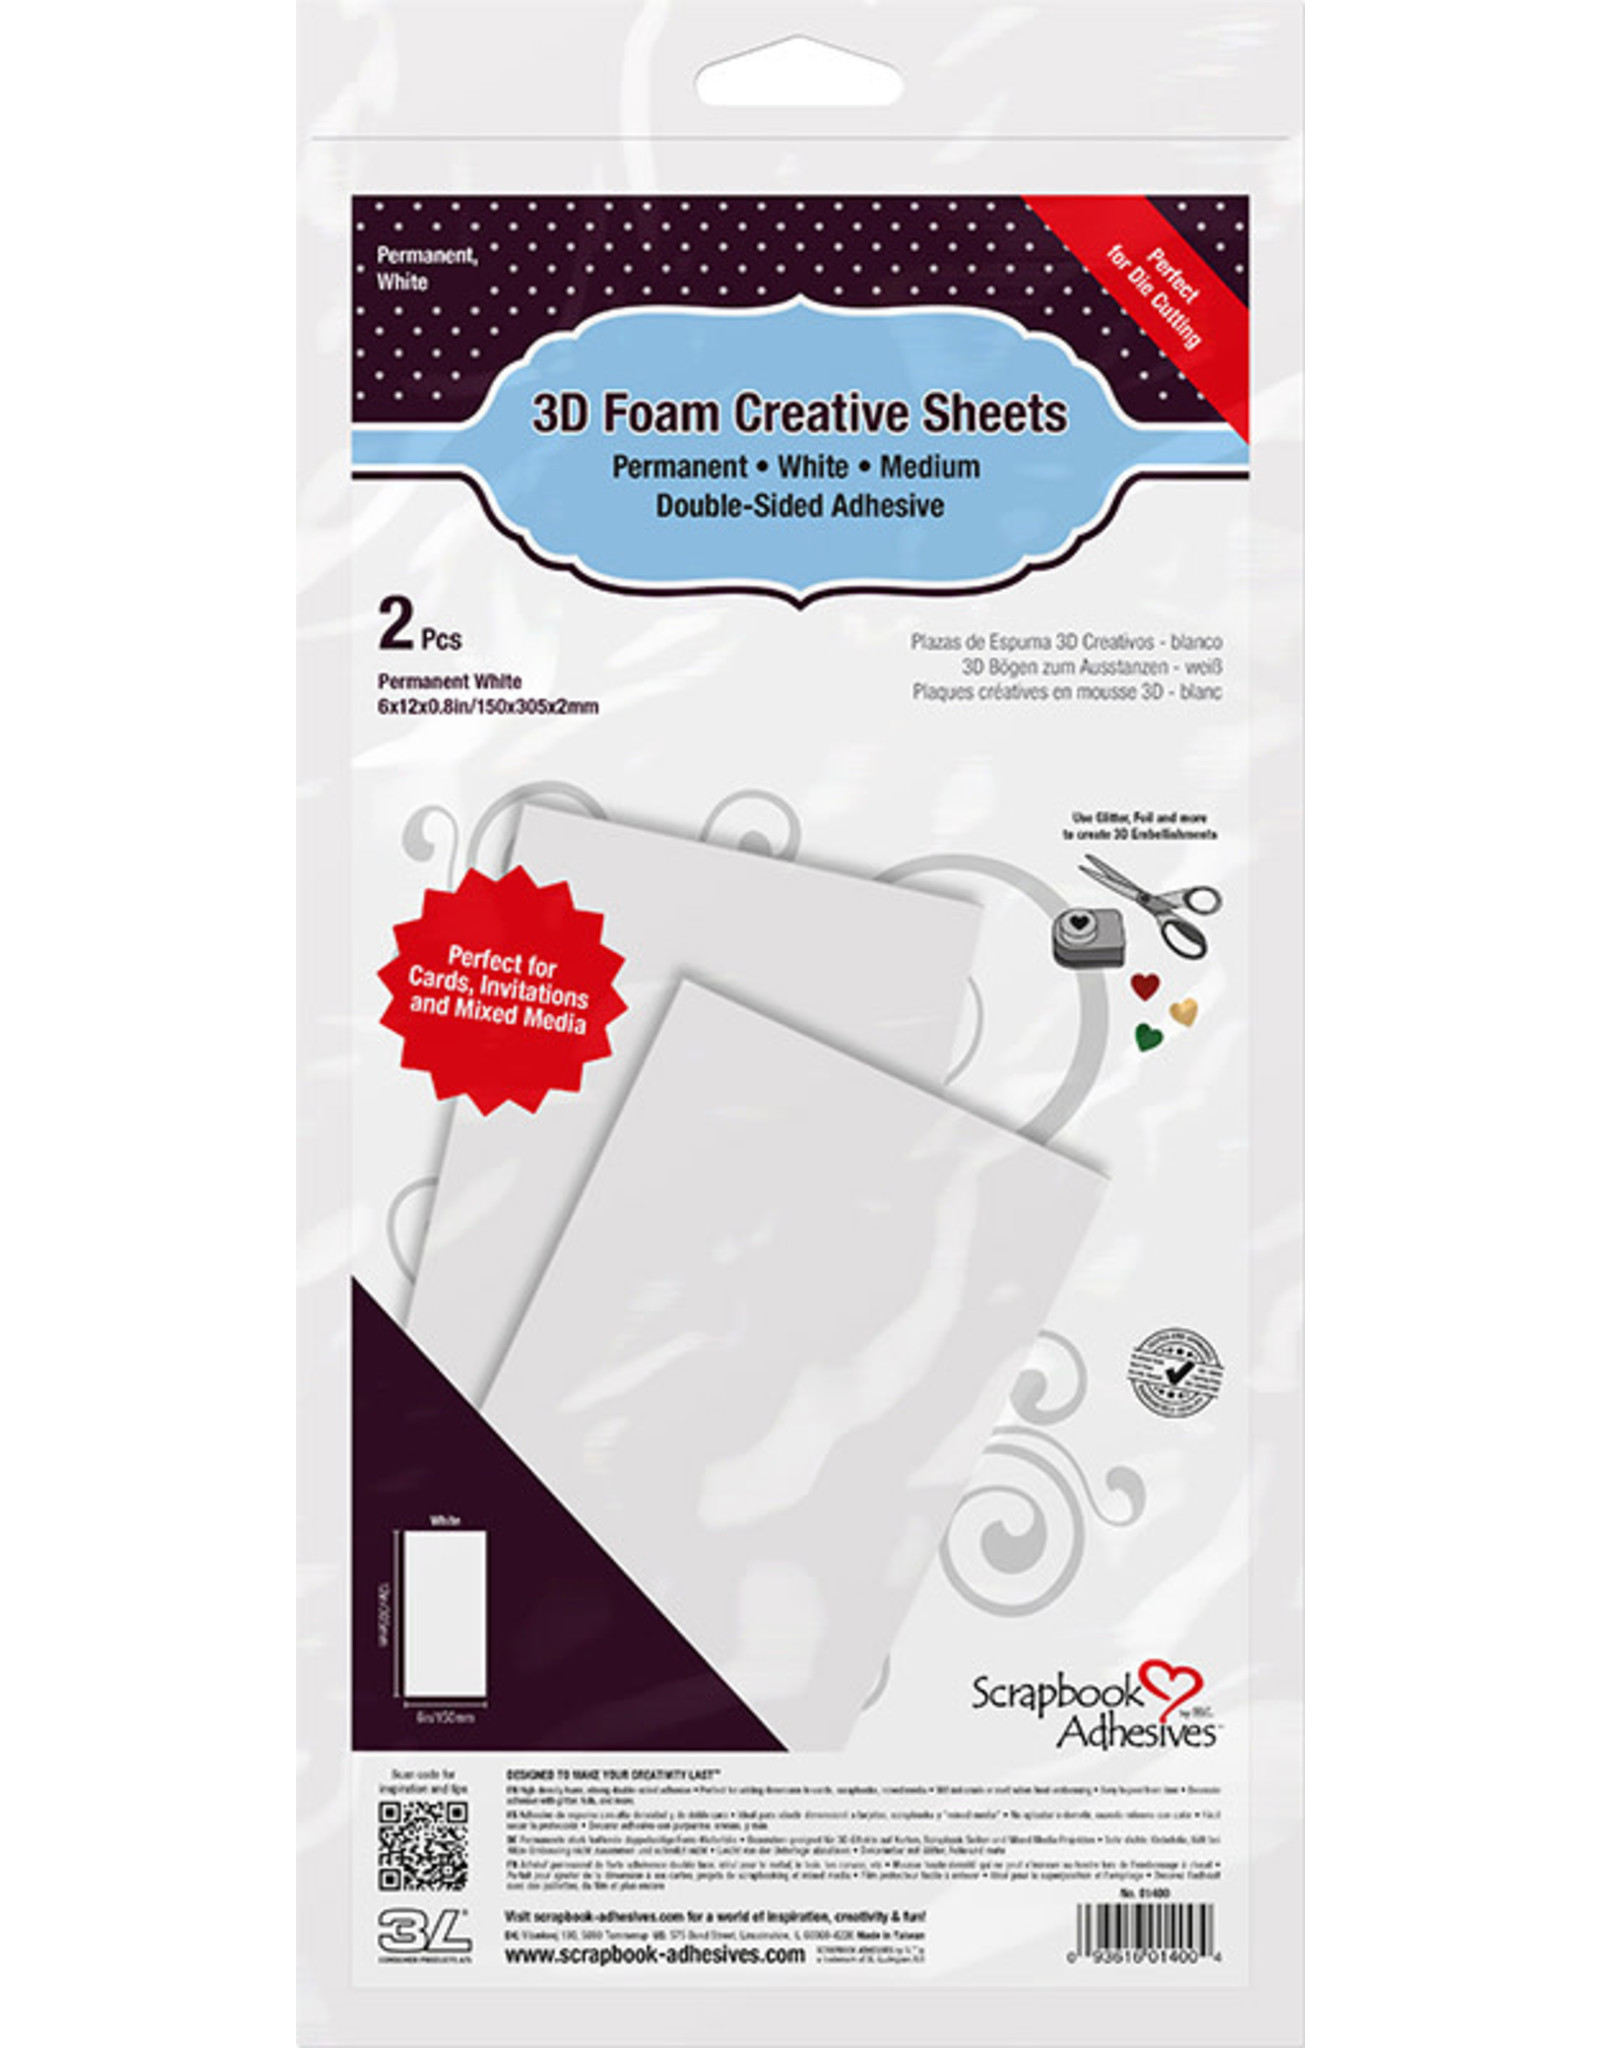 Scrapbook Adhesives 3D Foam Creative Sheets 6x12x0.8